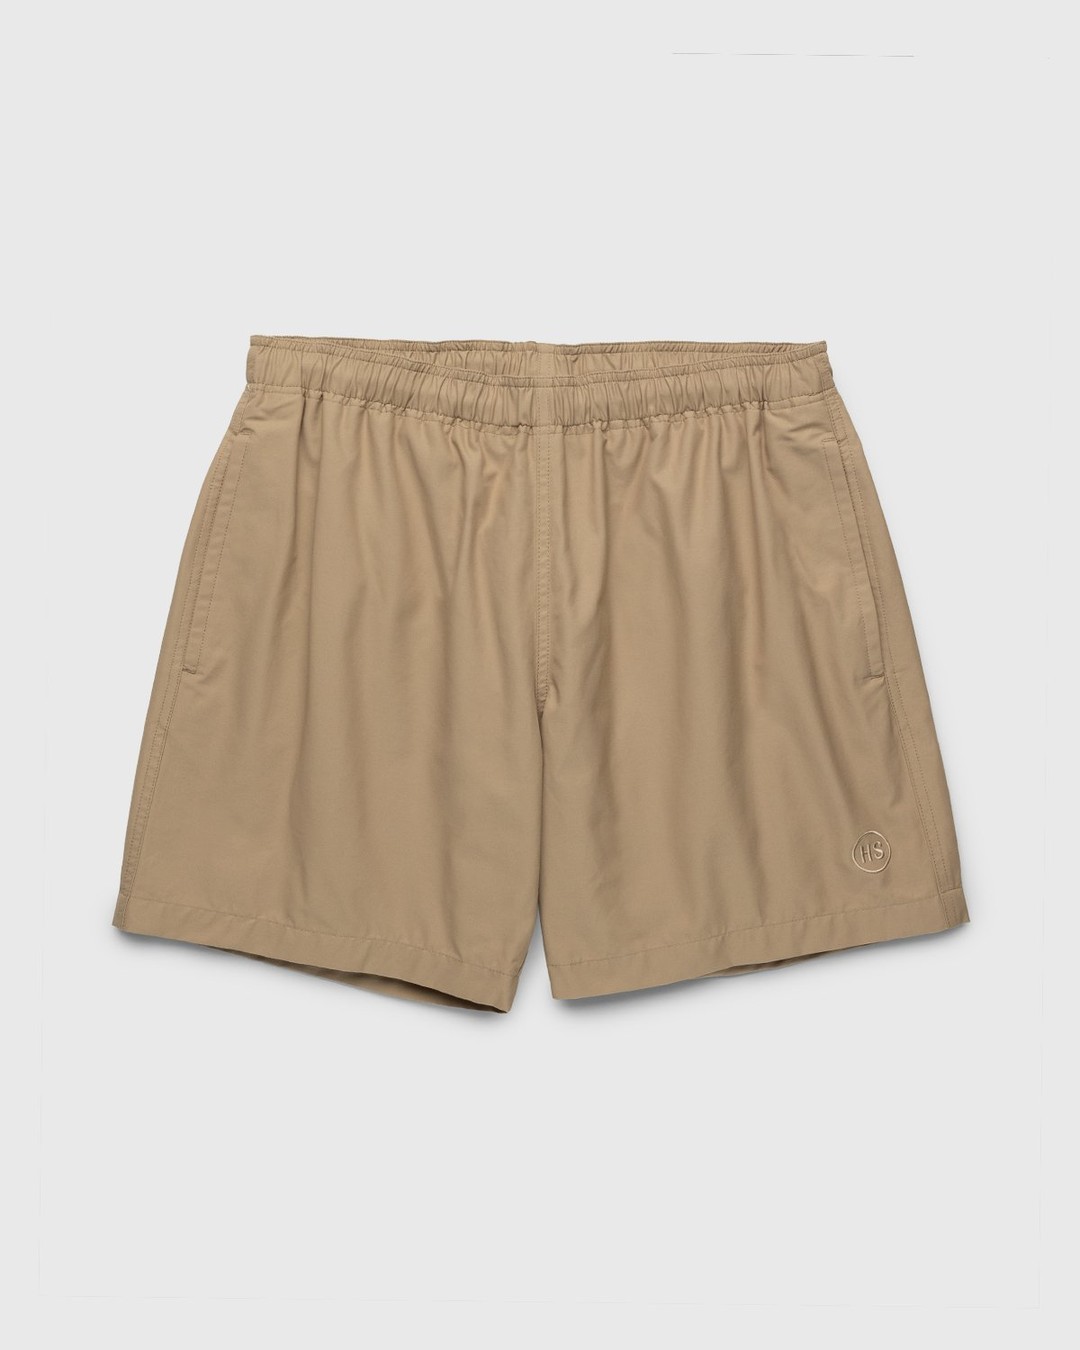 Highsnobiety – Cotton Nylon Water Shorts Beige - Active Shorts - Beige - Image 1